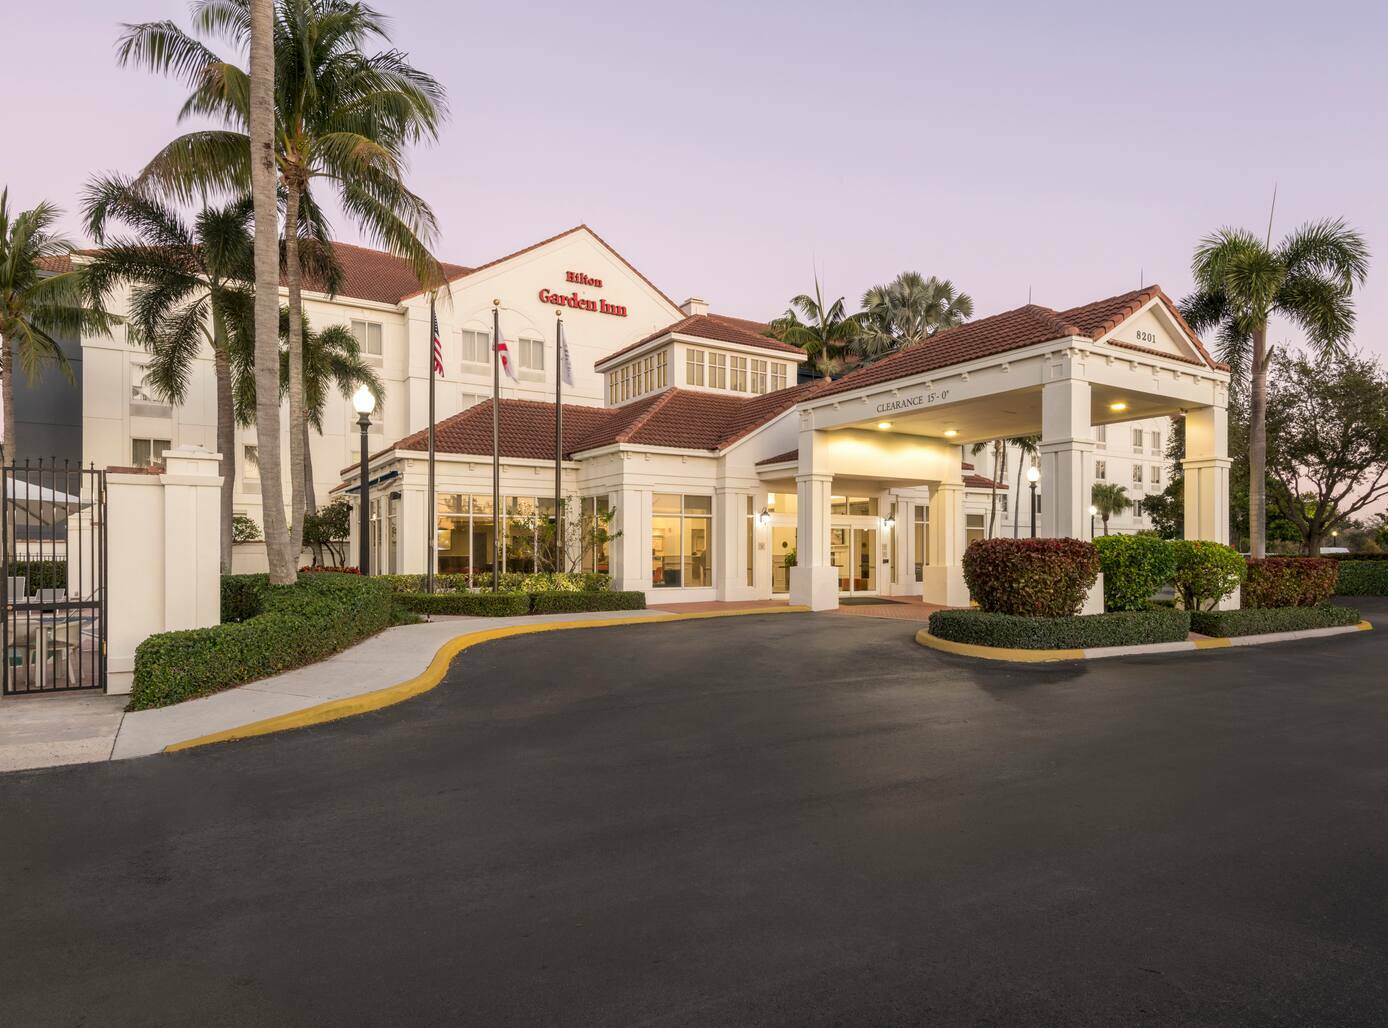 Photo of Hilton Garden Inn Boca Raton, Boca Raton, FL